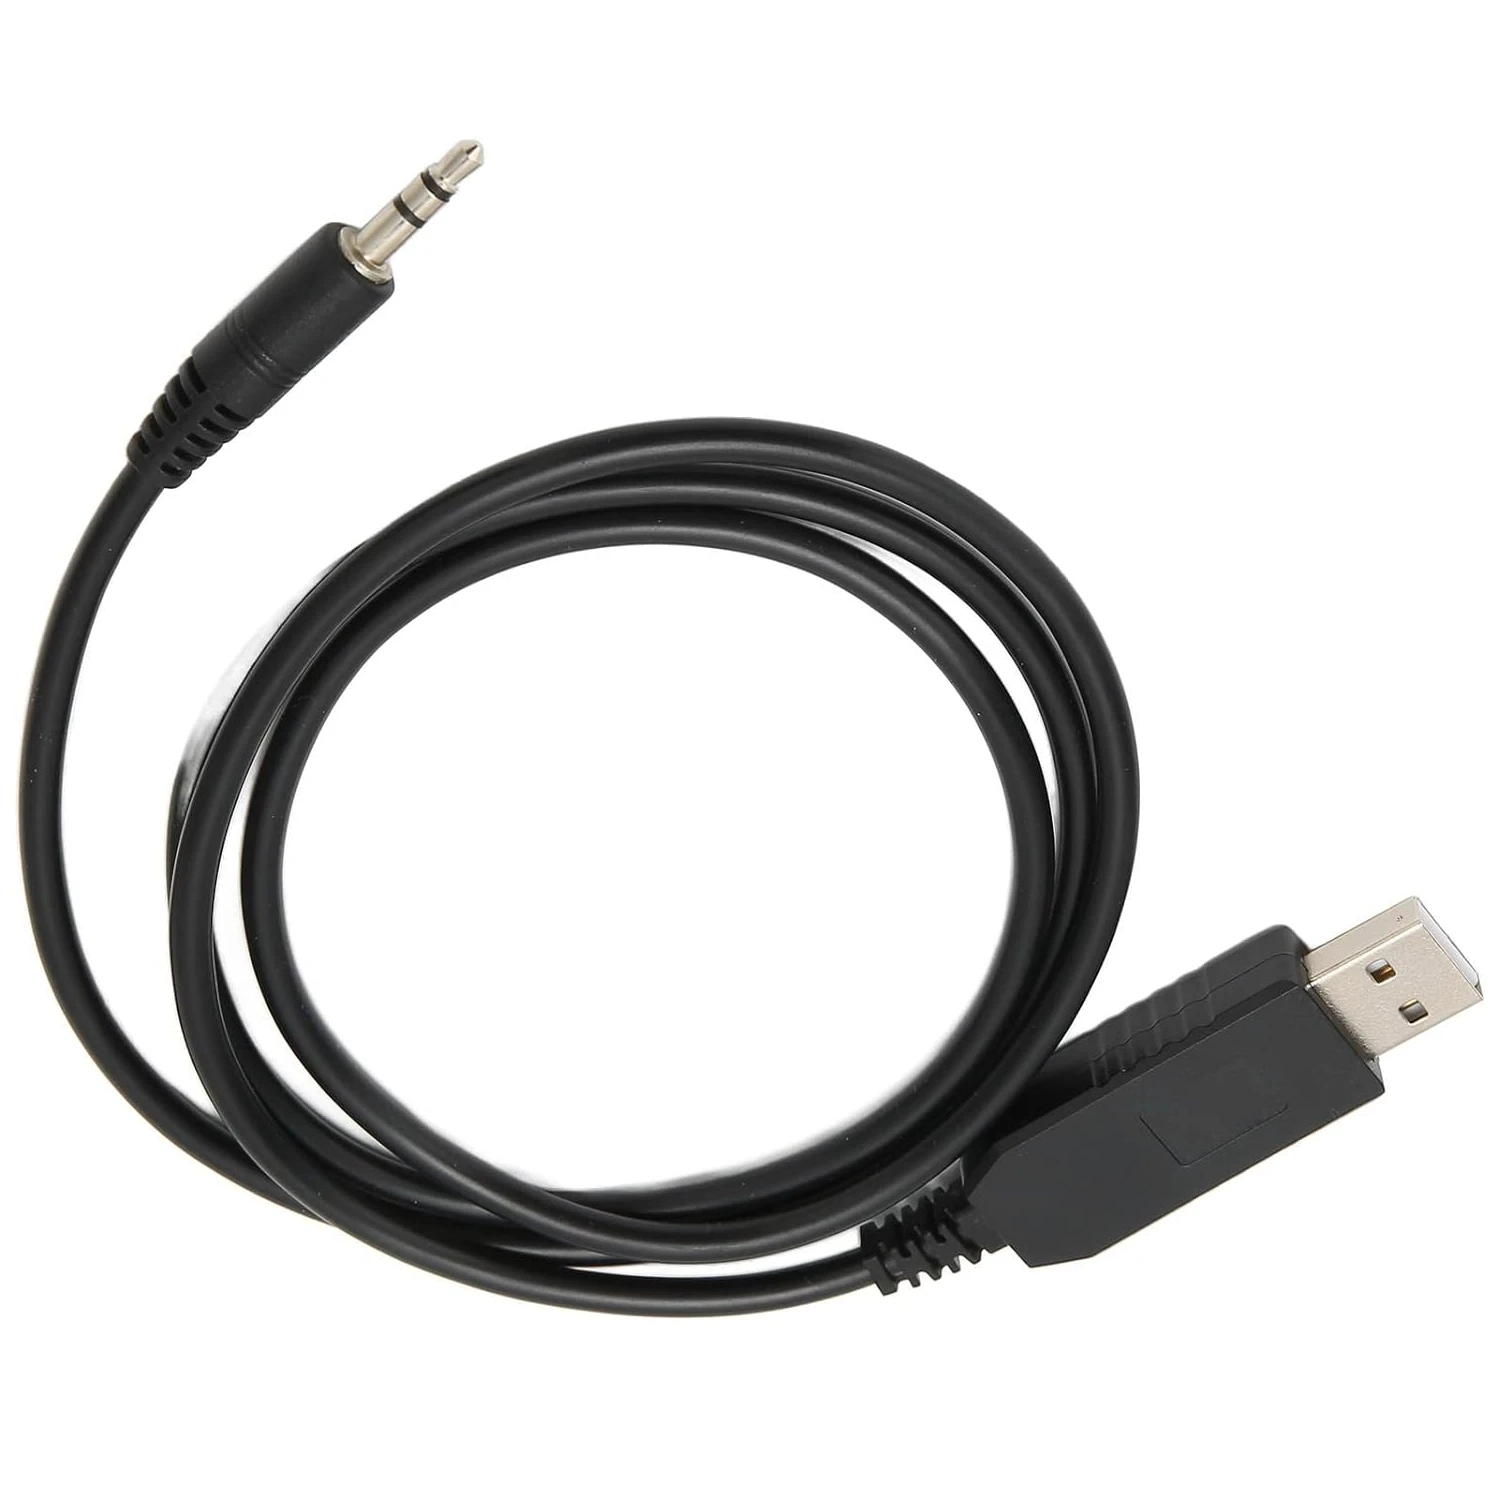 USB Programming Cable & CD for QYT KT8900 KT-8900D KT-7900D KT780 KT980 PLUS Mobile Radio PC Program Data Line Accessory